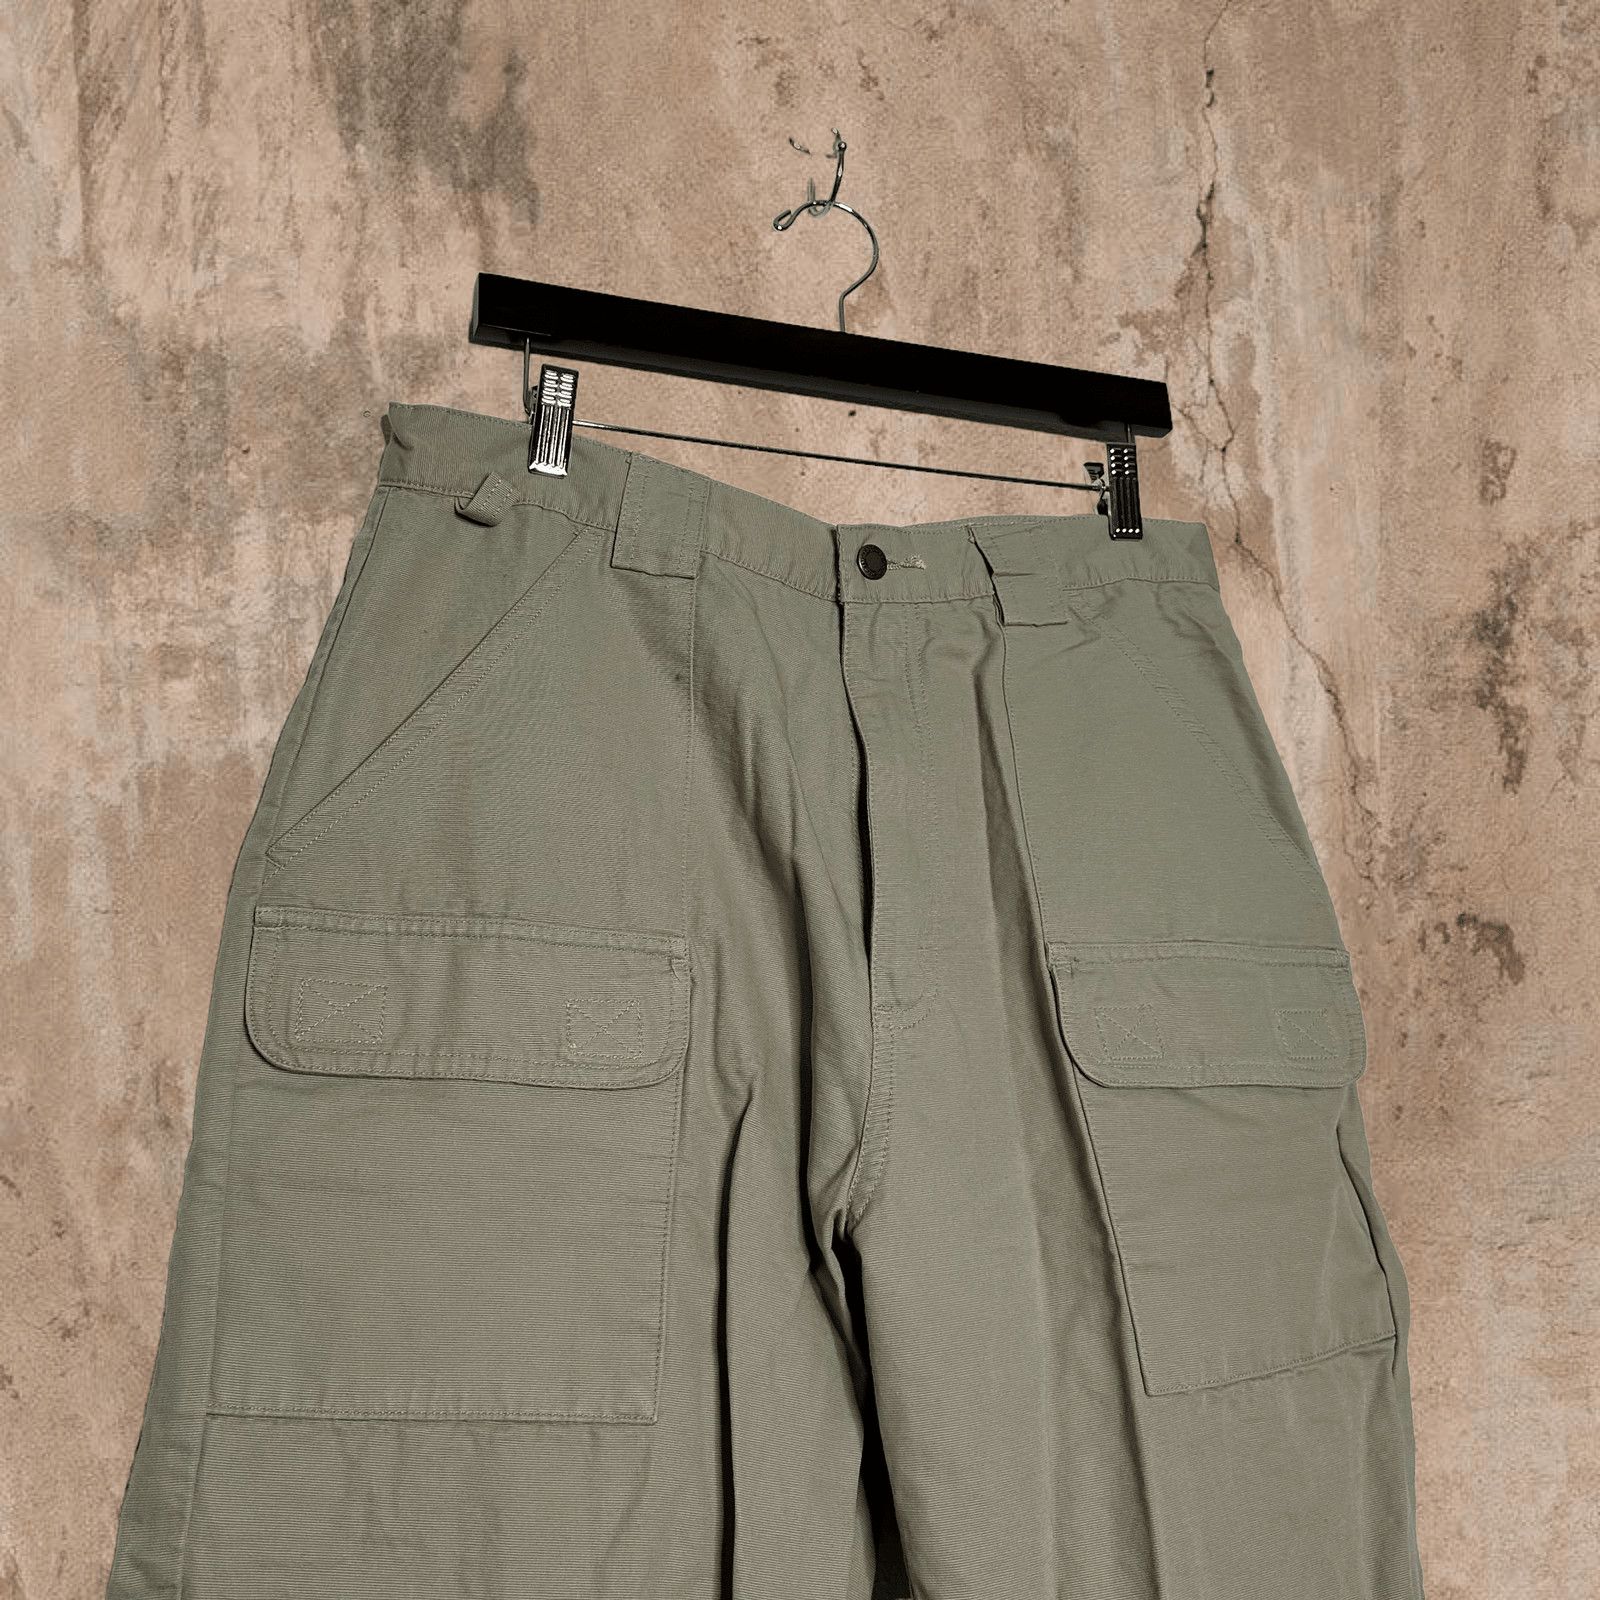 Vintage Light Tan Wrangler Cargo Pants Baggy Fit Size US 34 / EU 50 - 2 Preview